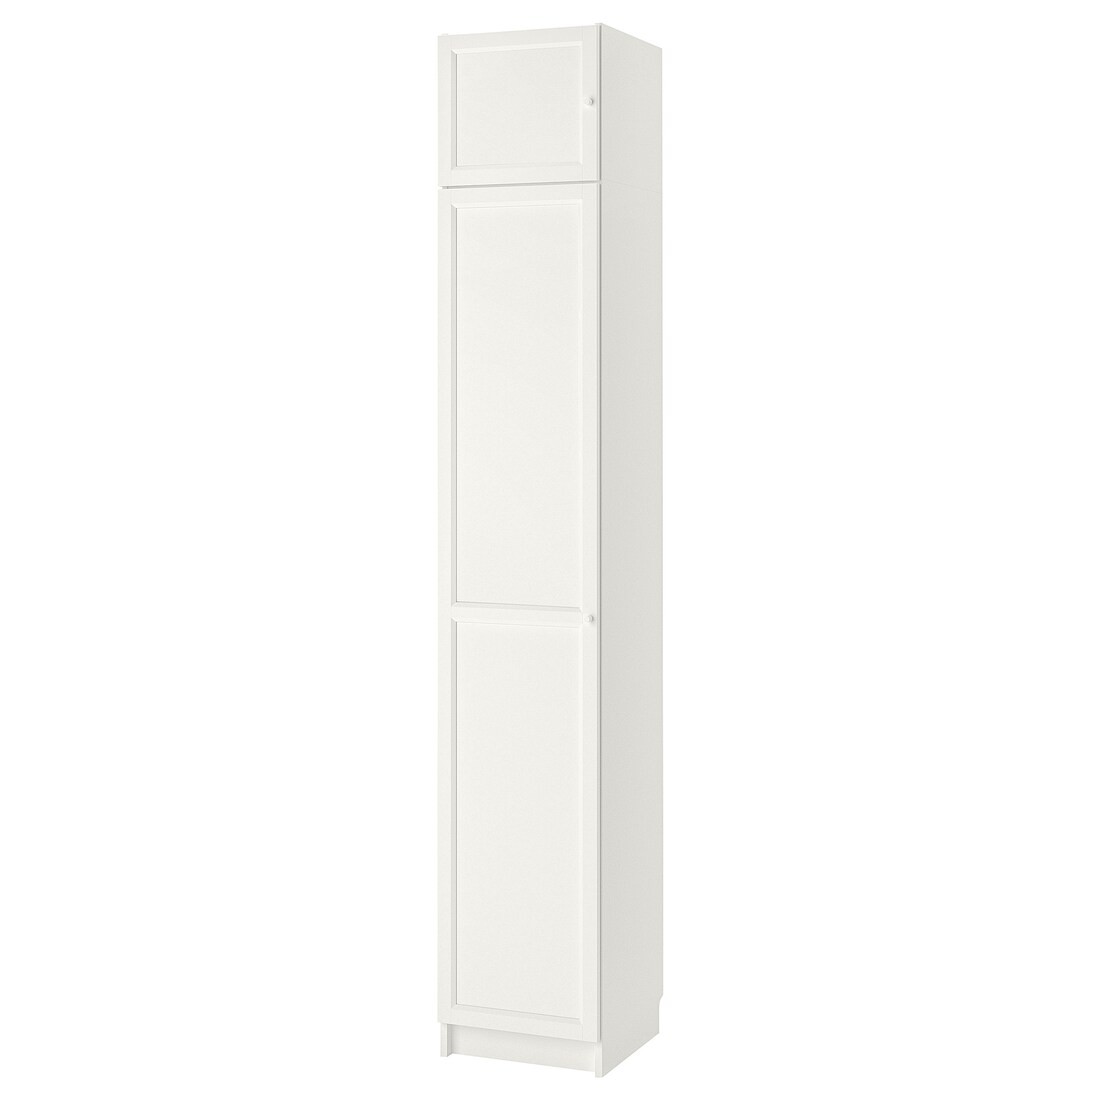 IKEA BILLY БИЛЛИ / OXBERG ОКСБЕРГ Стеллаж с надставкой / дверями, белый, 40x42x237 cм 89424835 894.248.35